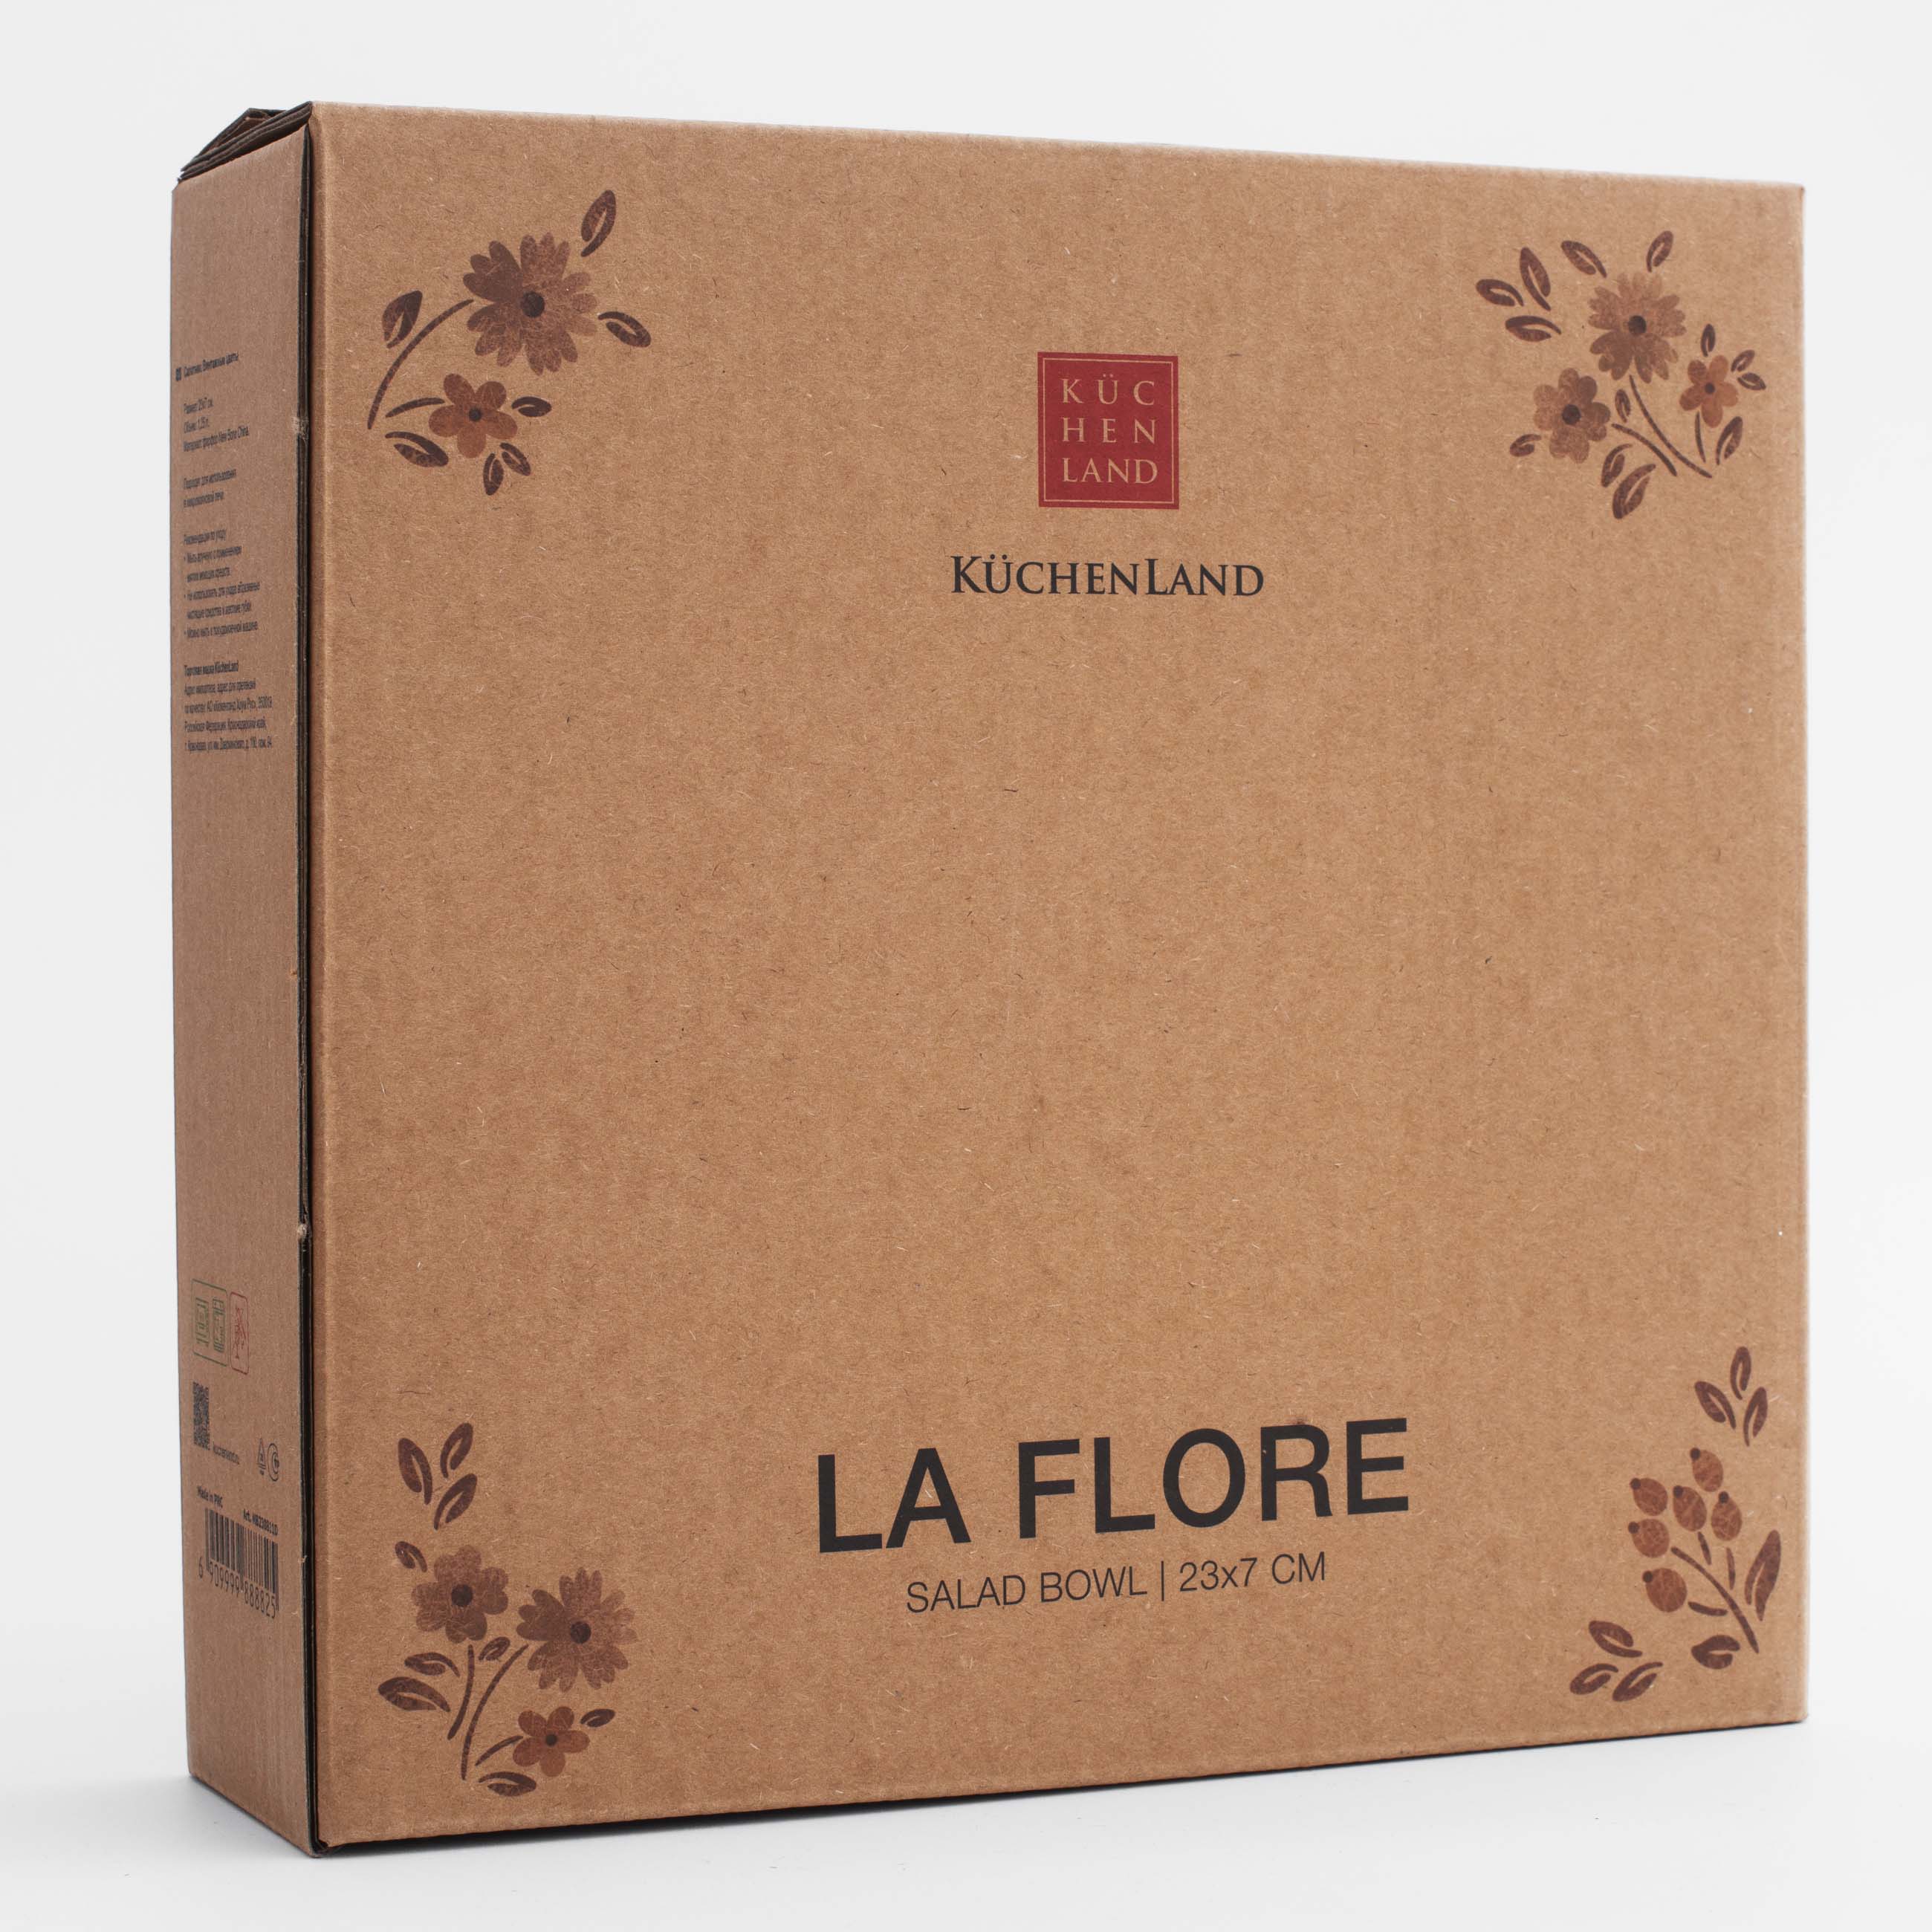 Салатник, 23х7 см, 1,25 л, фарфор N, белый, Винтажные цветы, La flore